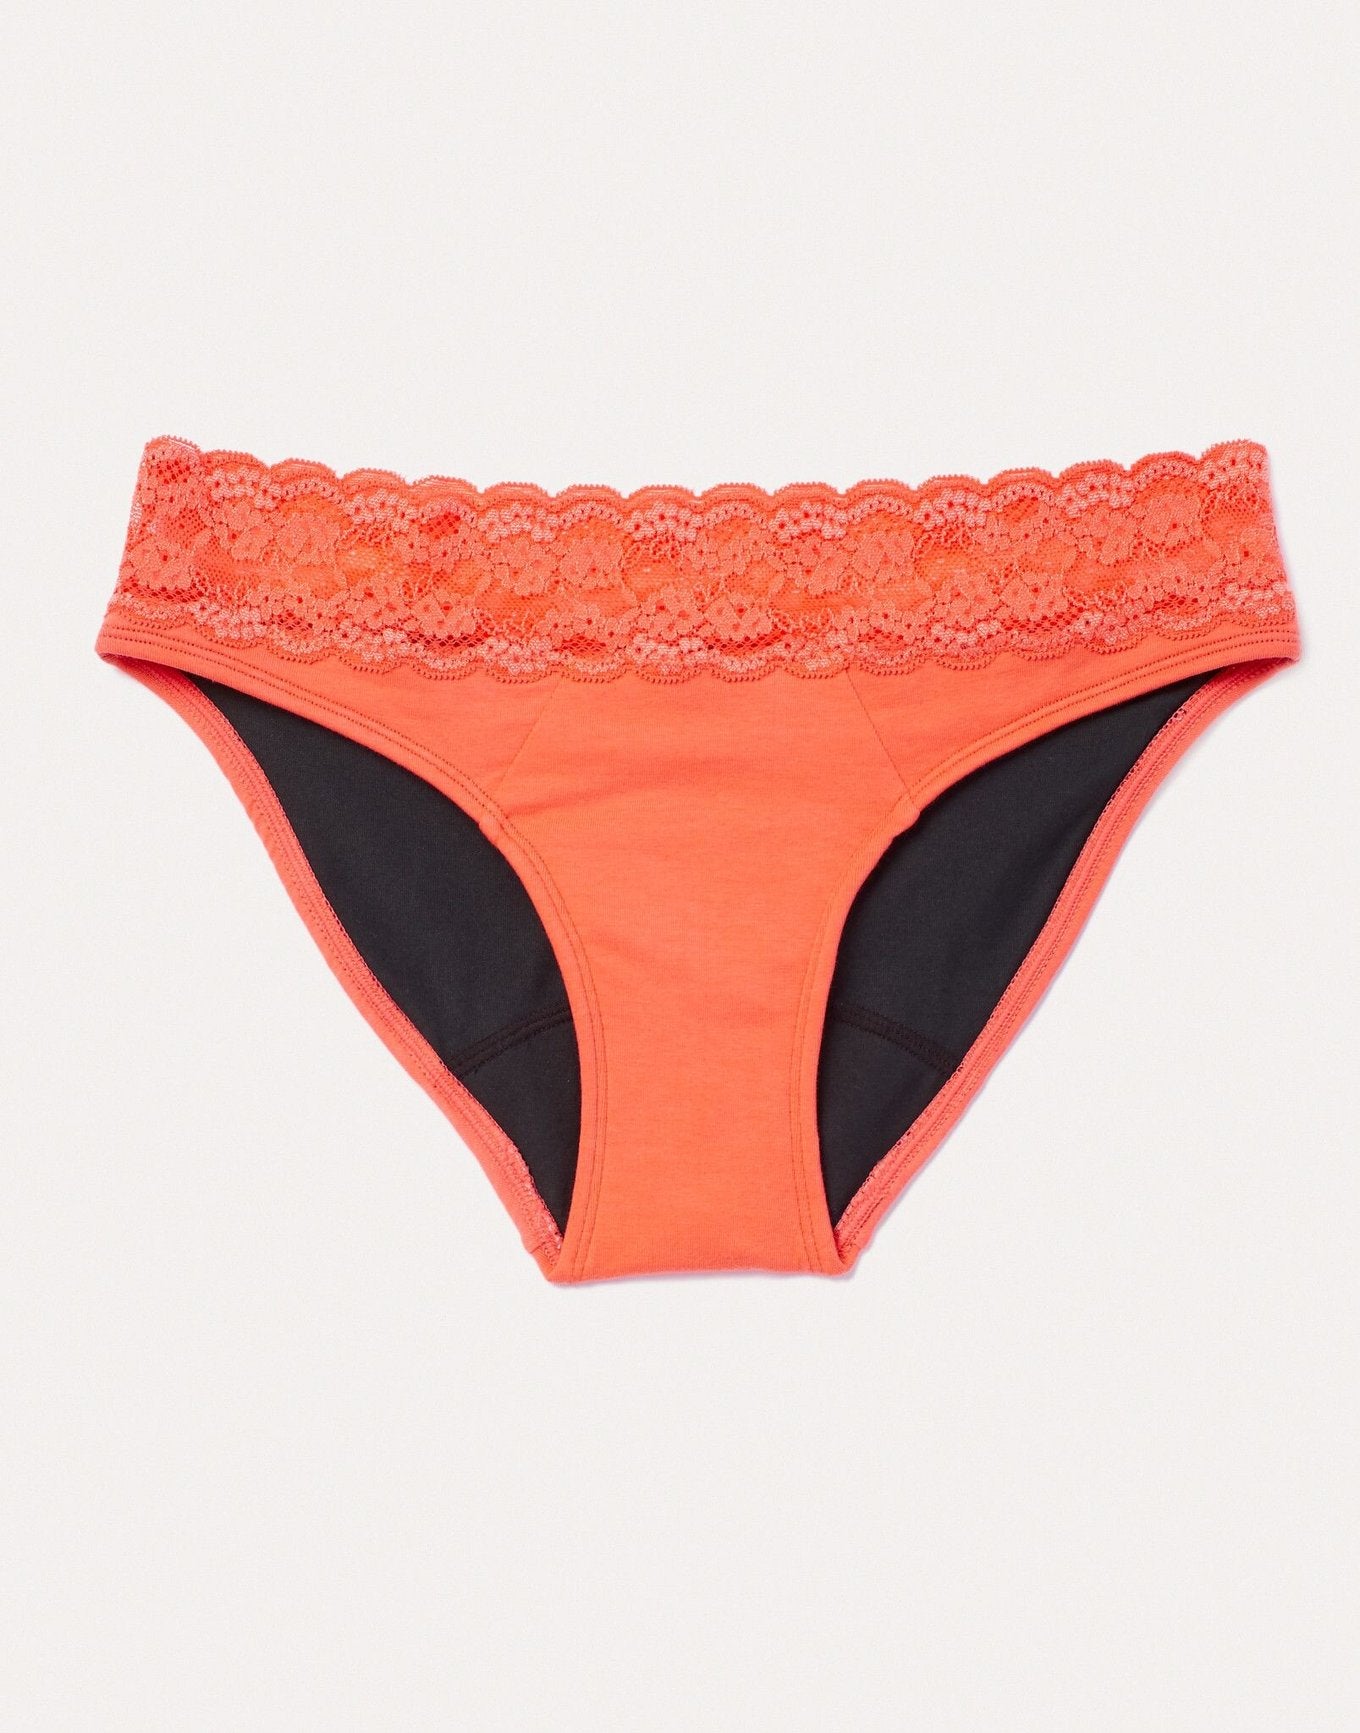 Joyja Alice period-proof panty in color Living Coral and shape bikini